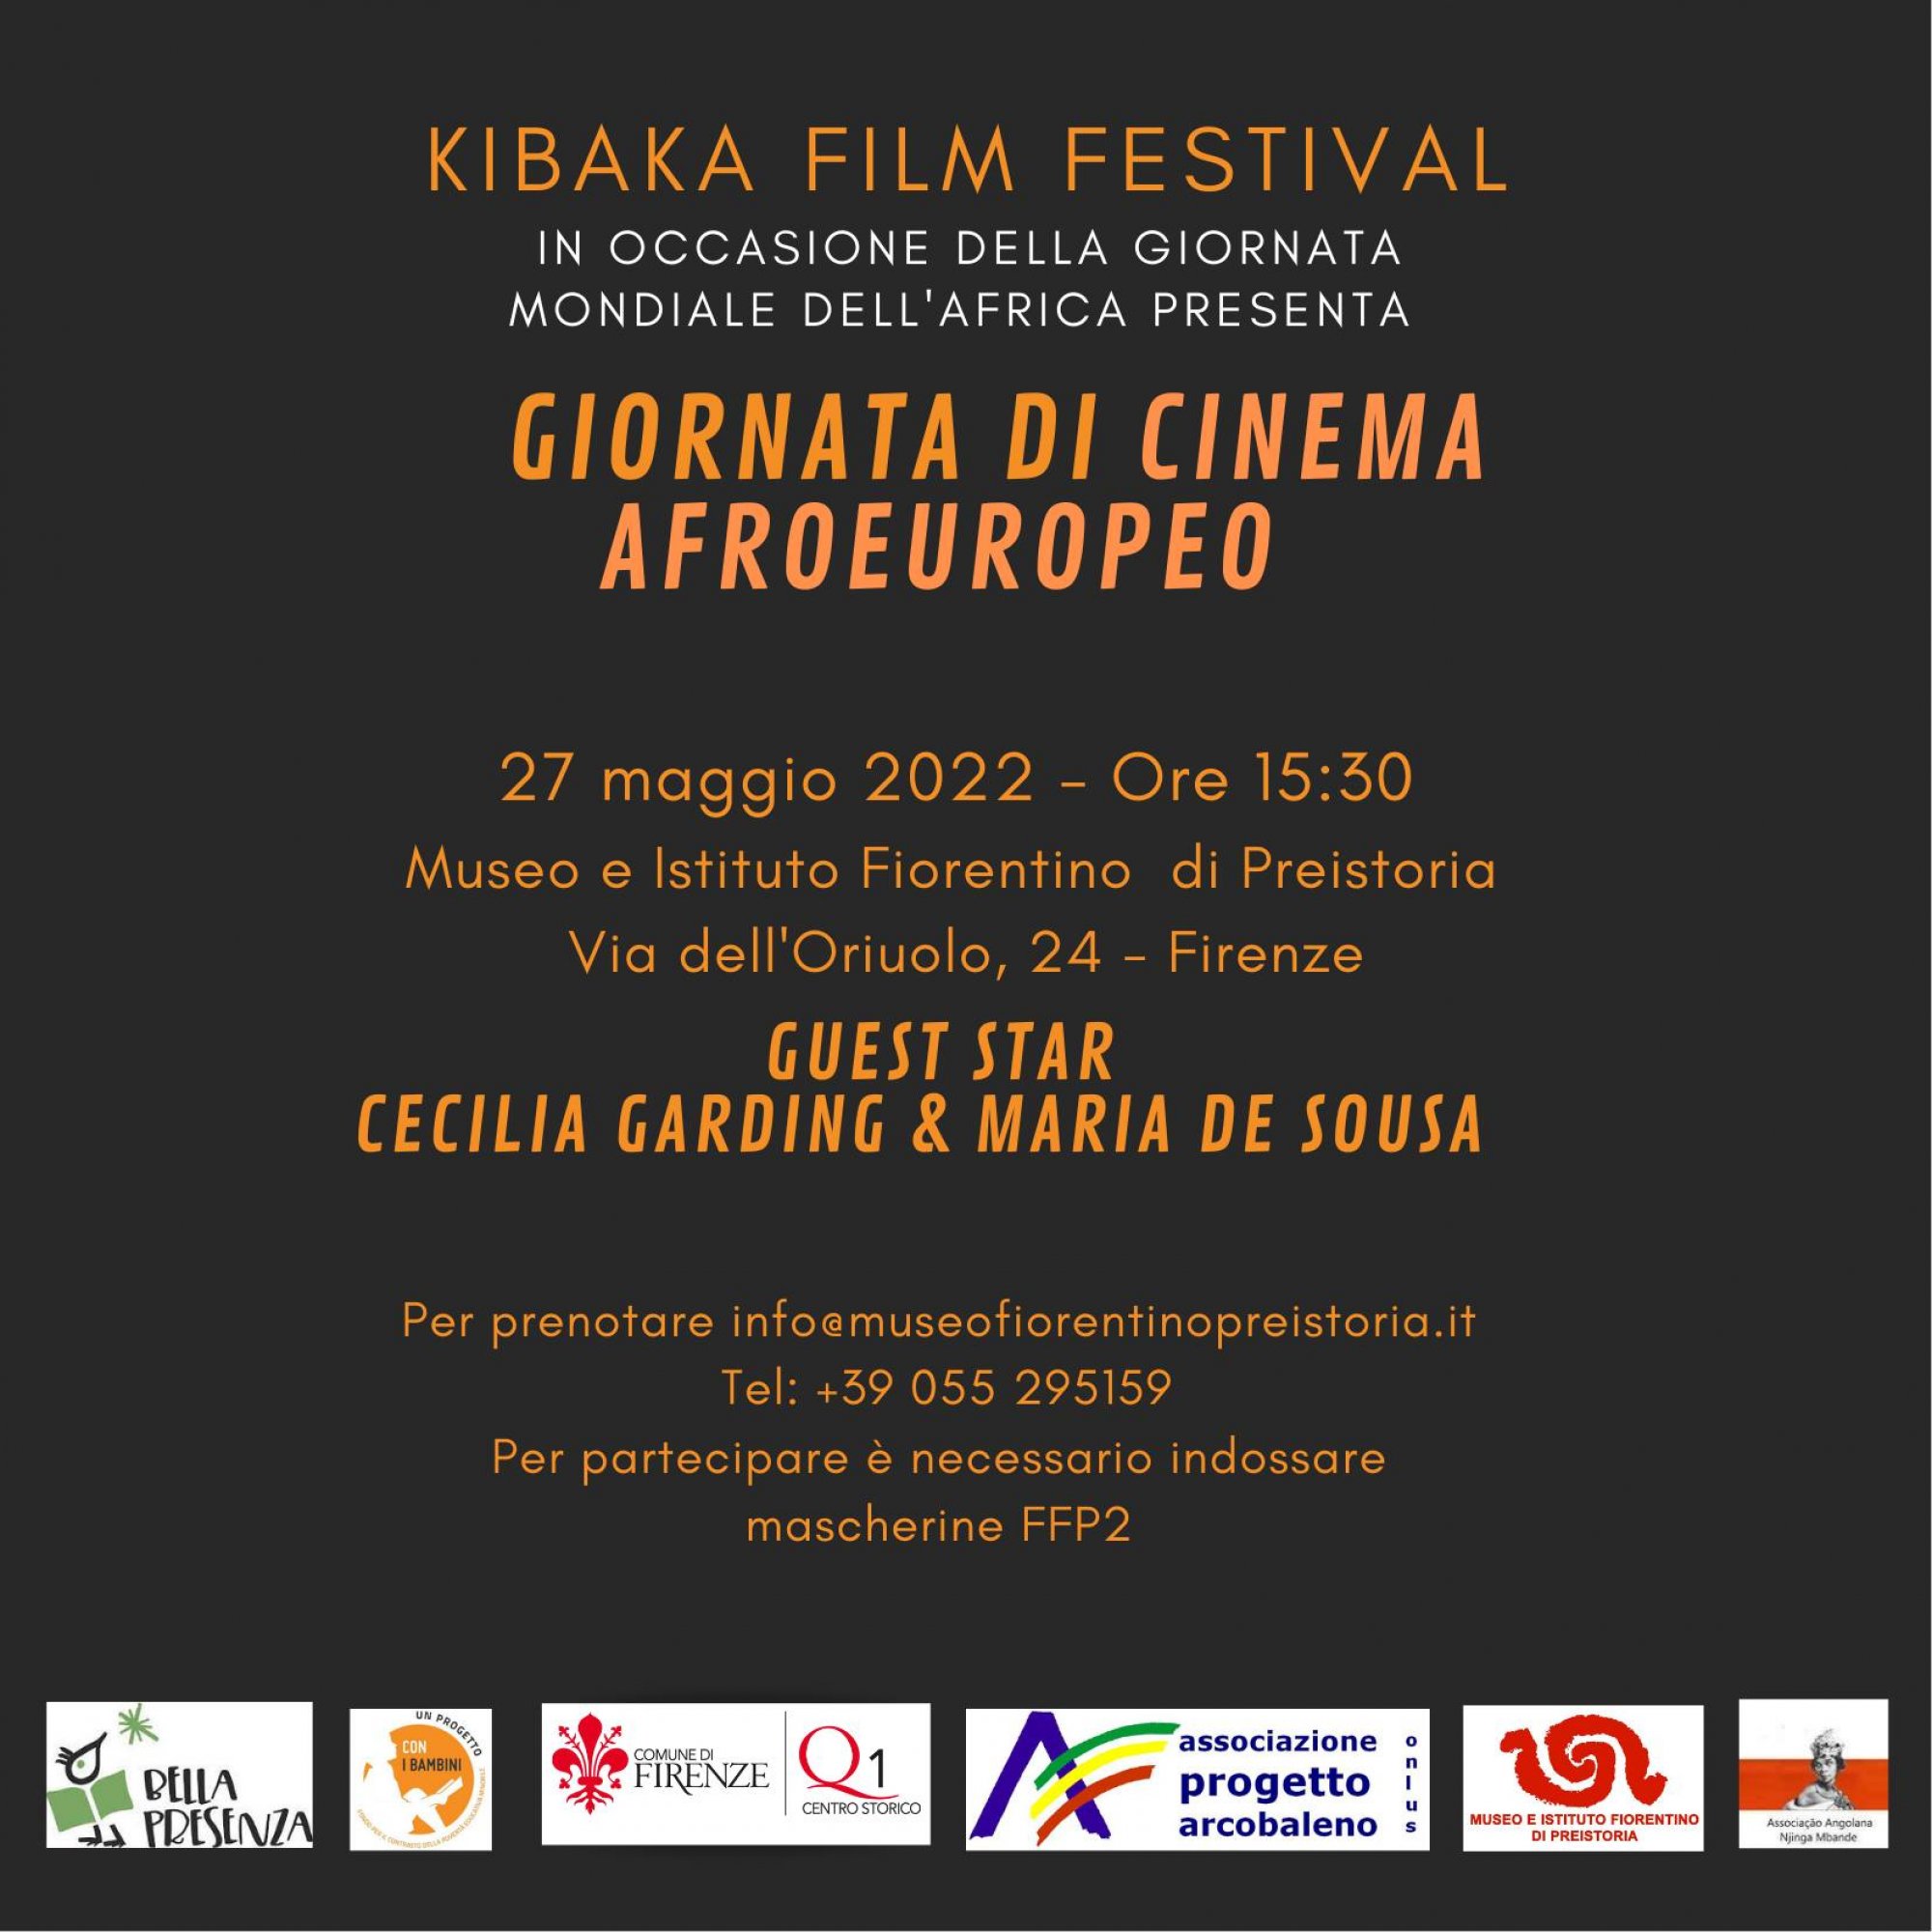 Kibaka Film Festival - Giornata di cinema afroeuropeo